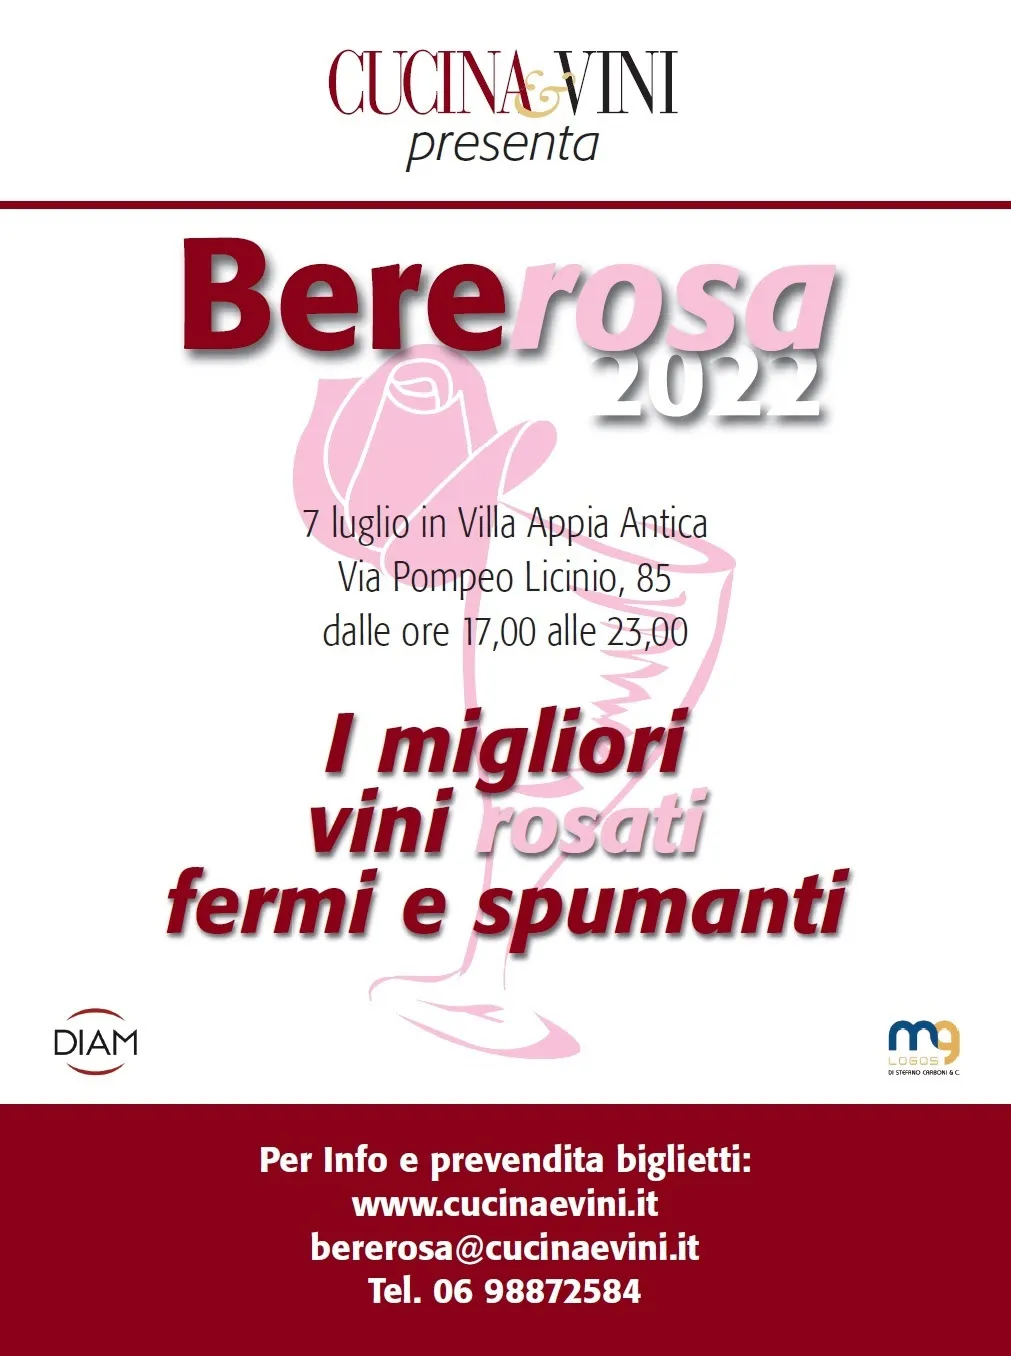 Recensione di Bererosa 2022 – Cucina&Vini